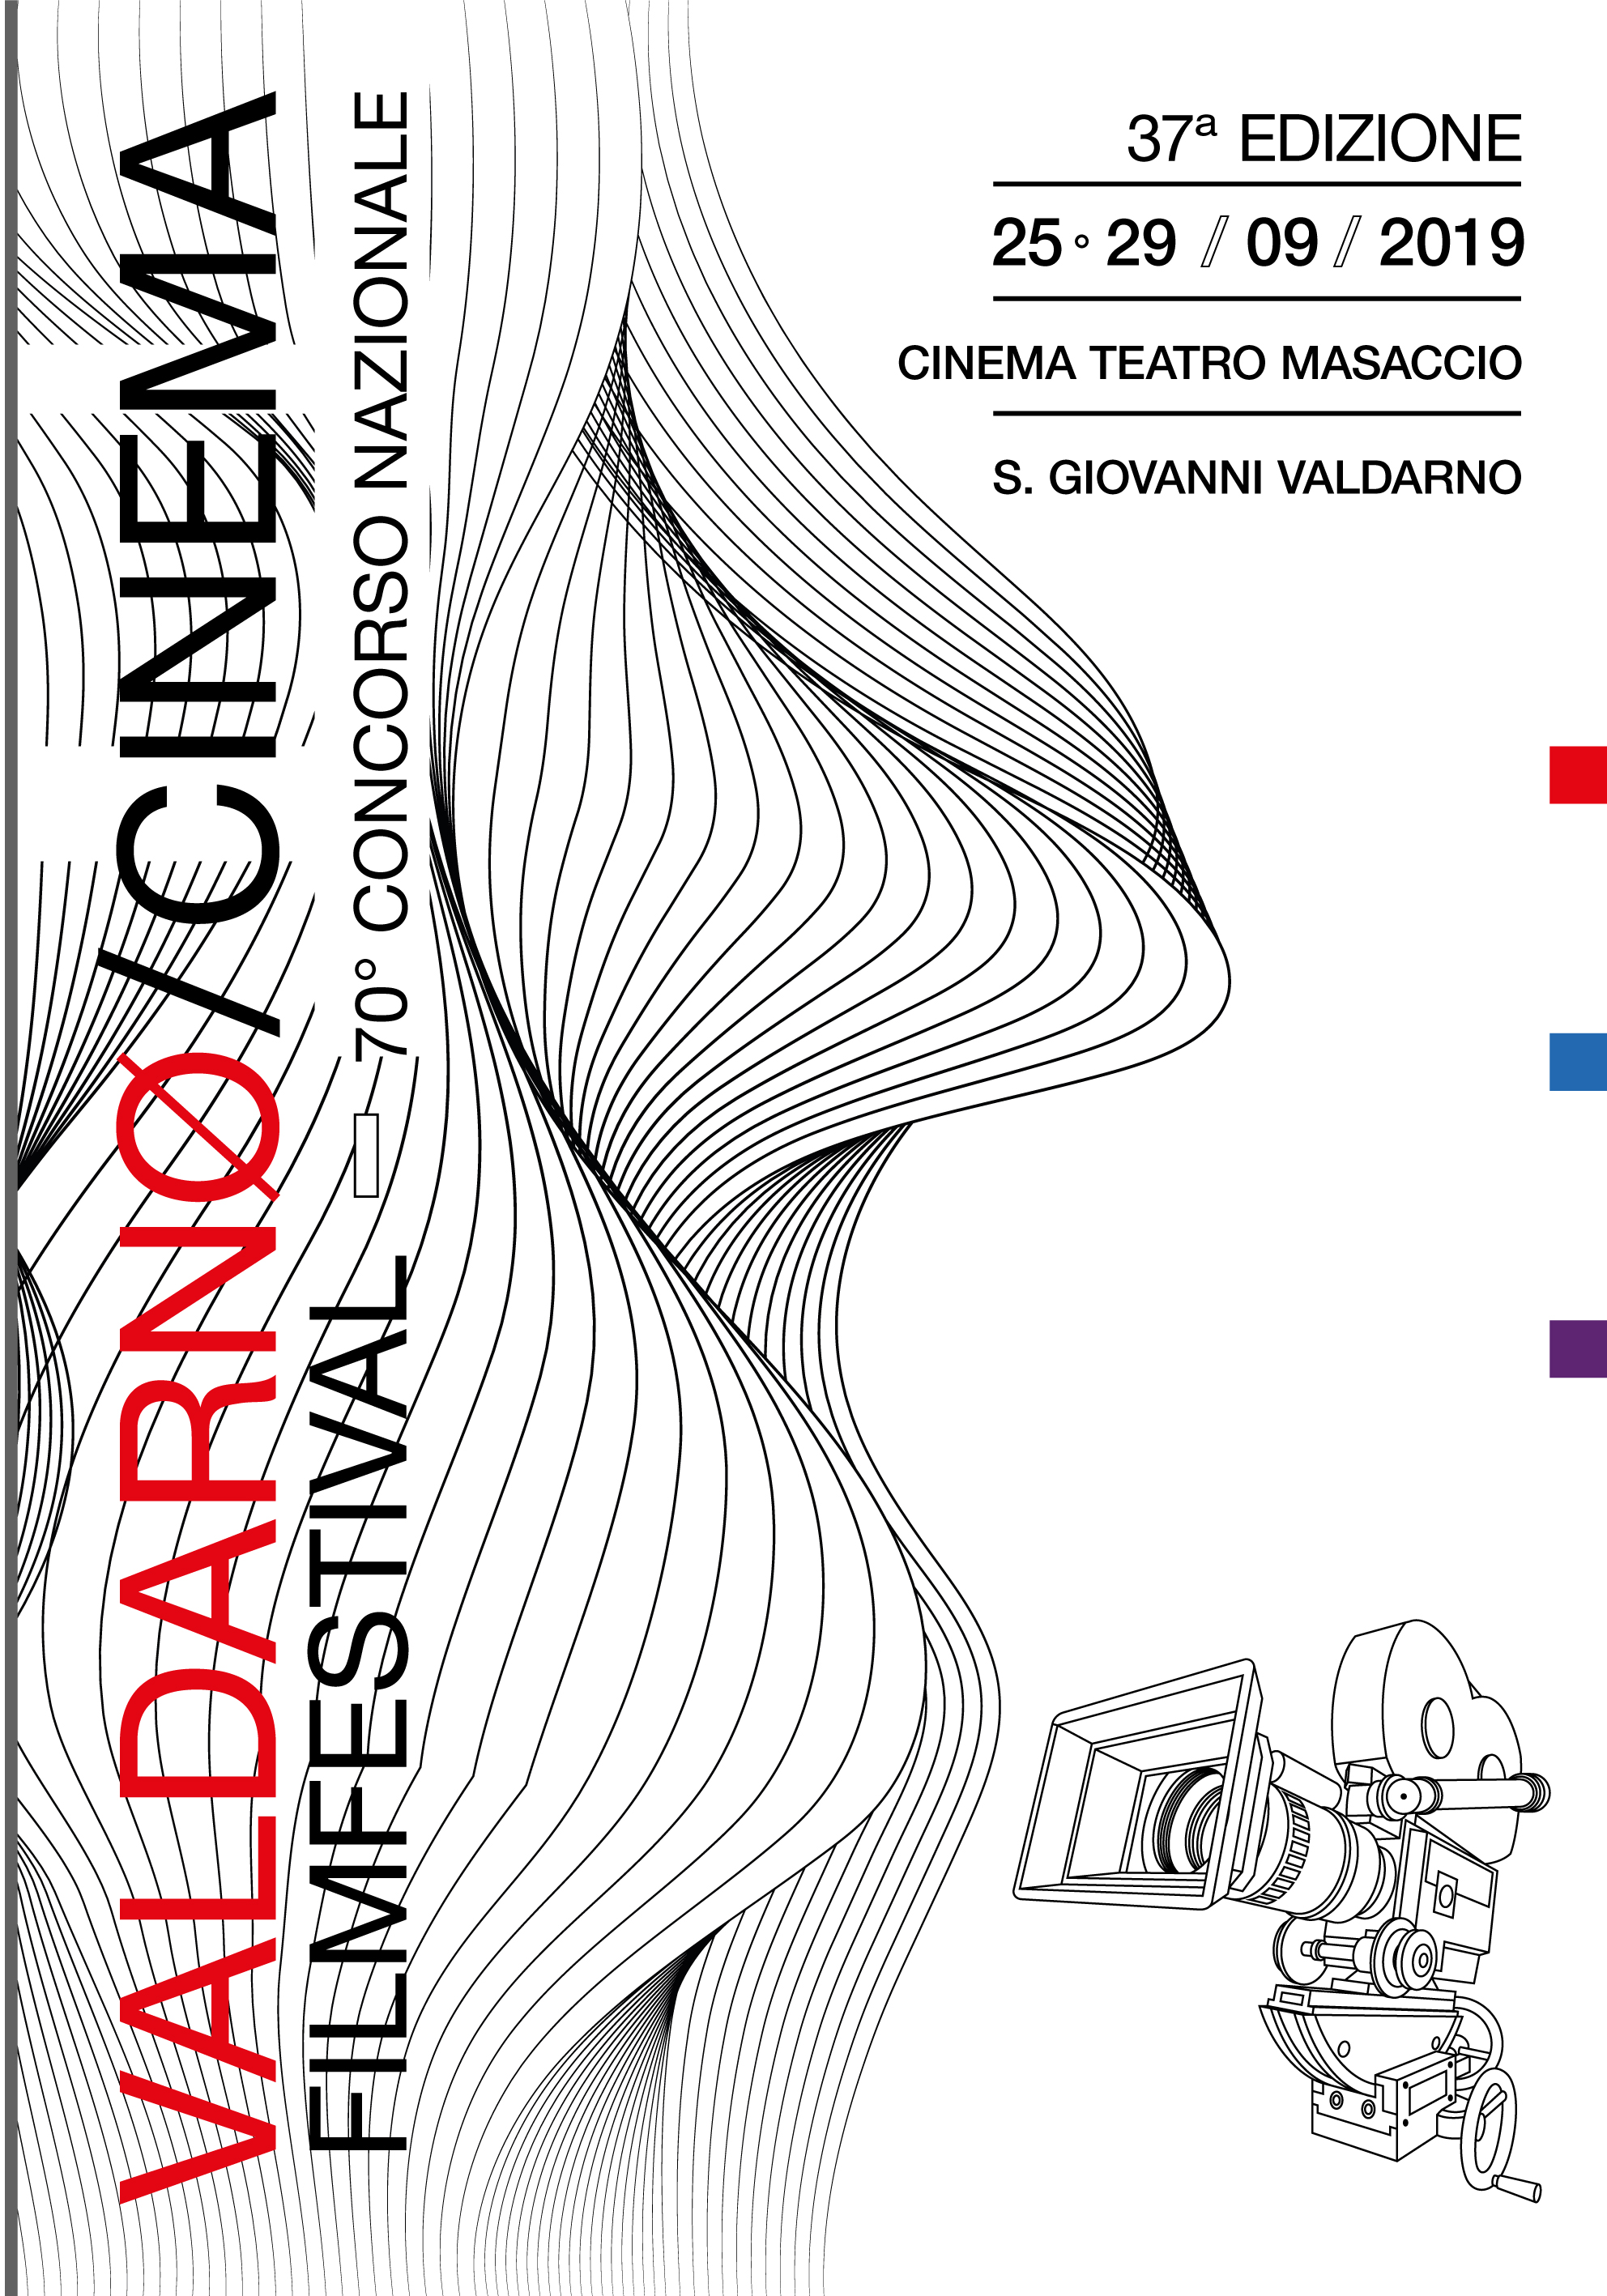 ValdarnoCinema Film Festival 2019 – Il Programma